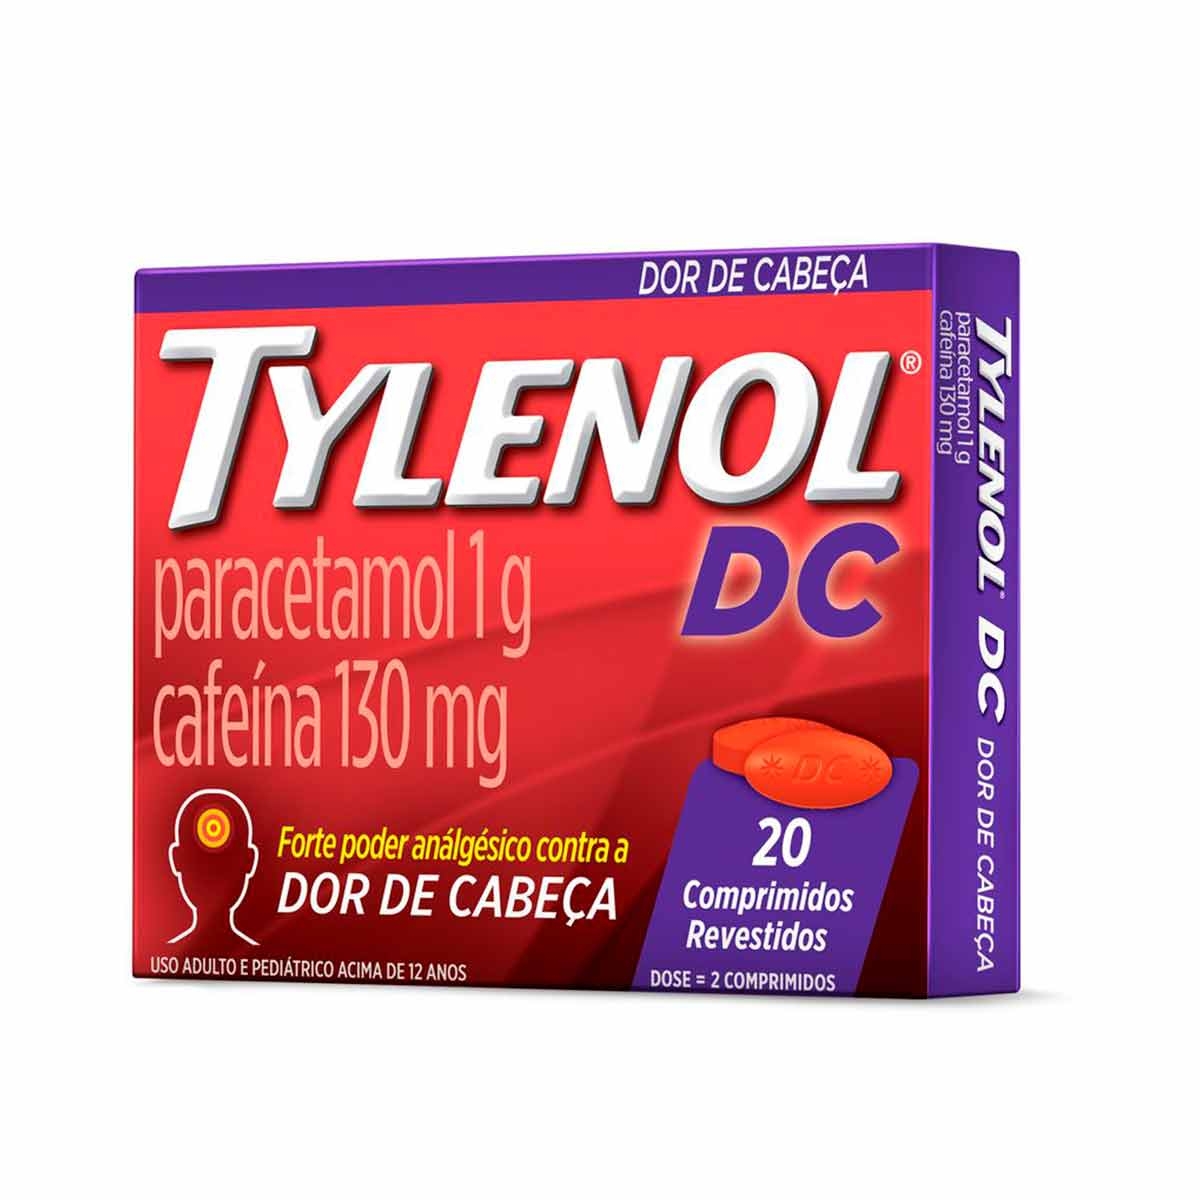 Tylenol DC Paracetamol 1g + Cafeína 130mg 20 comprimidos